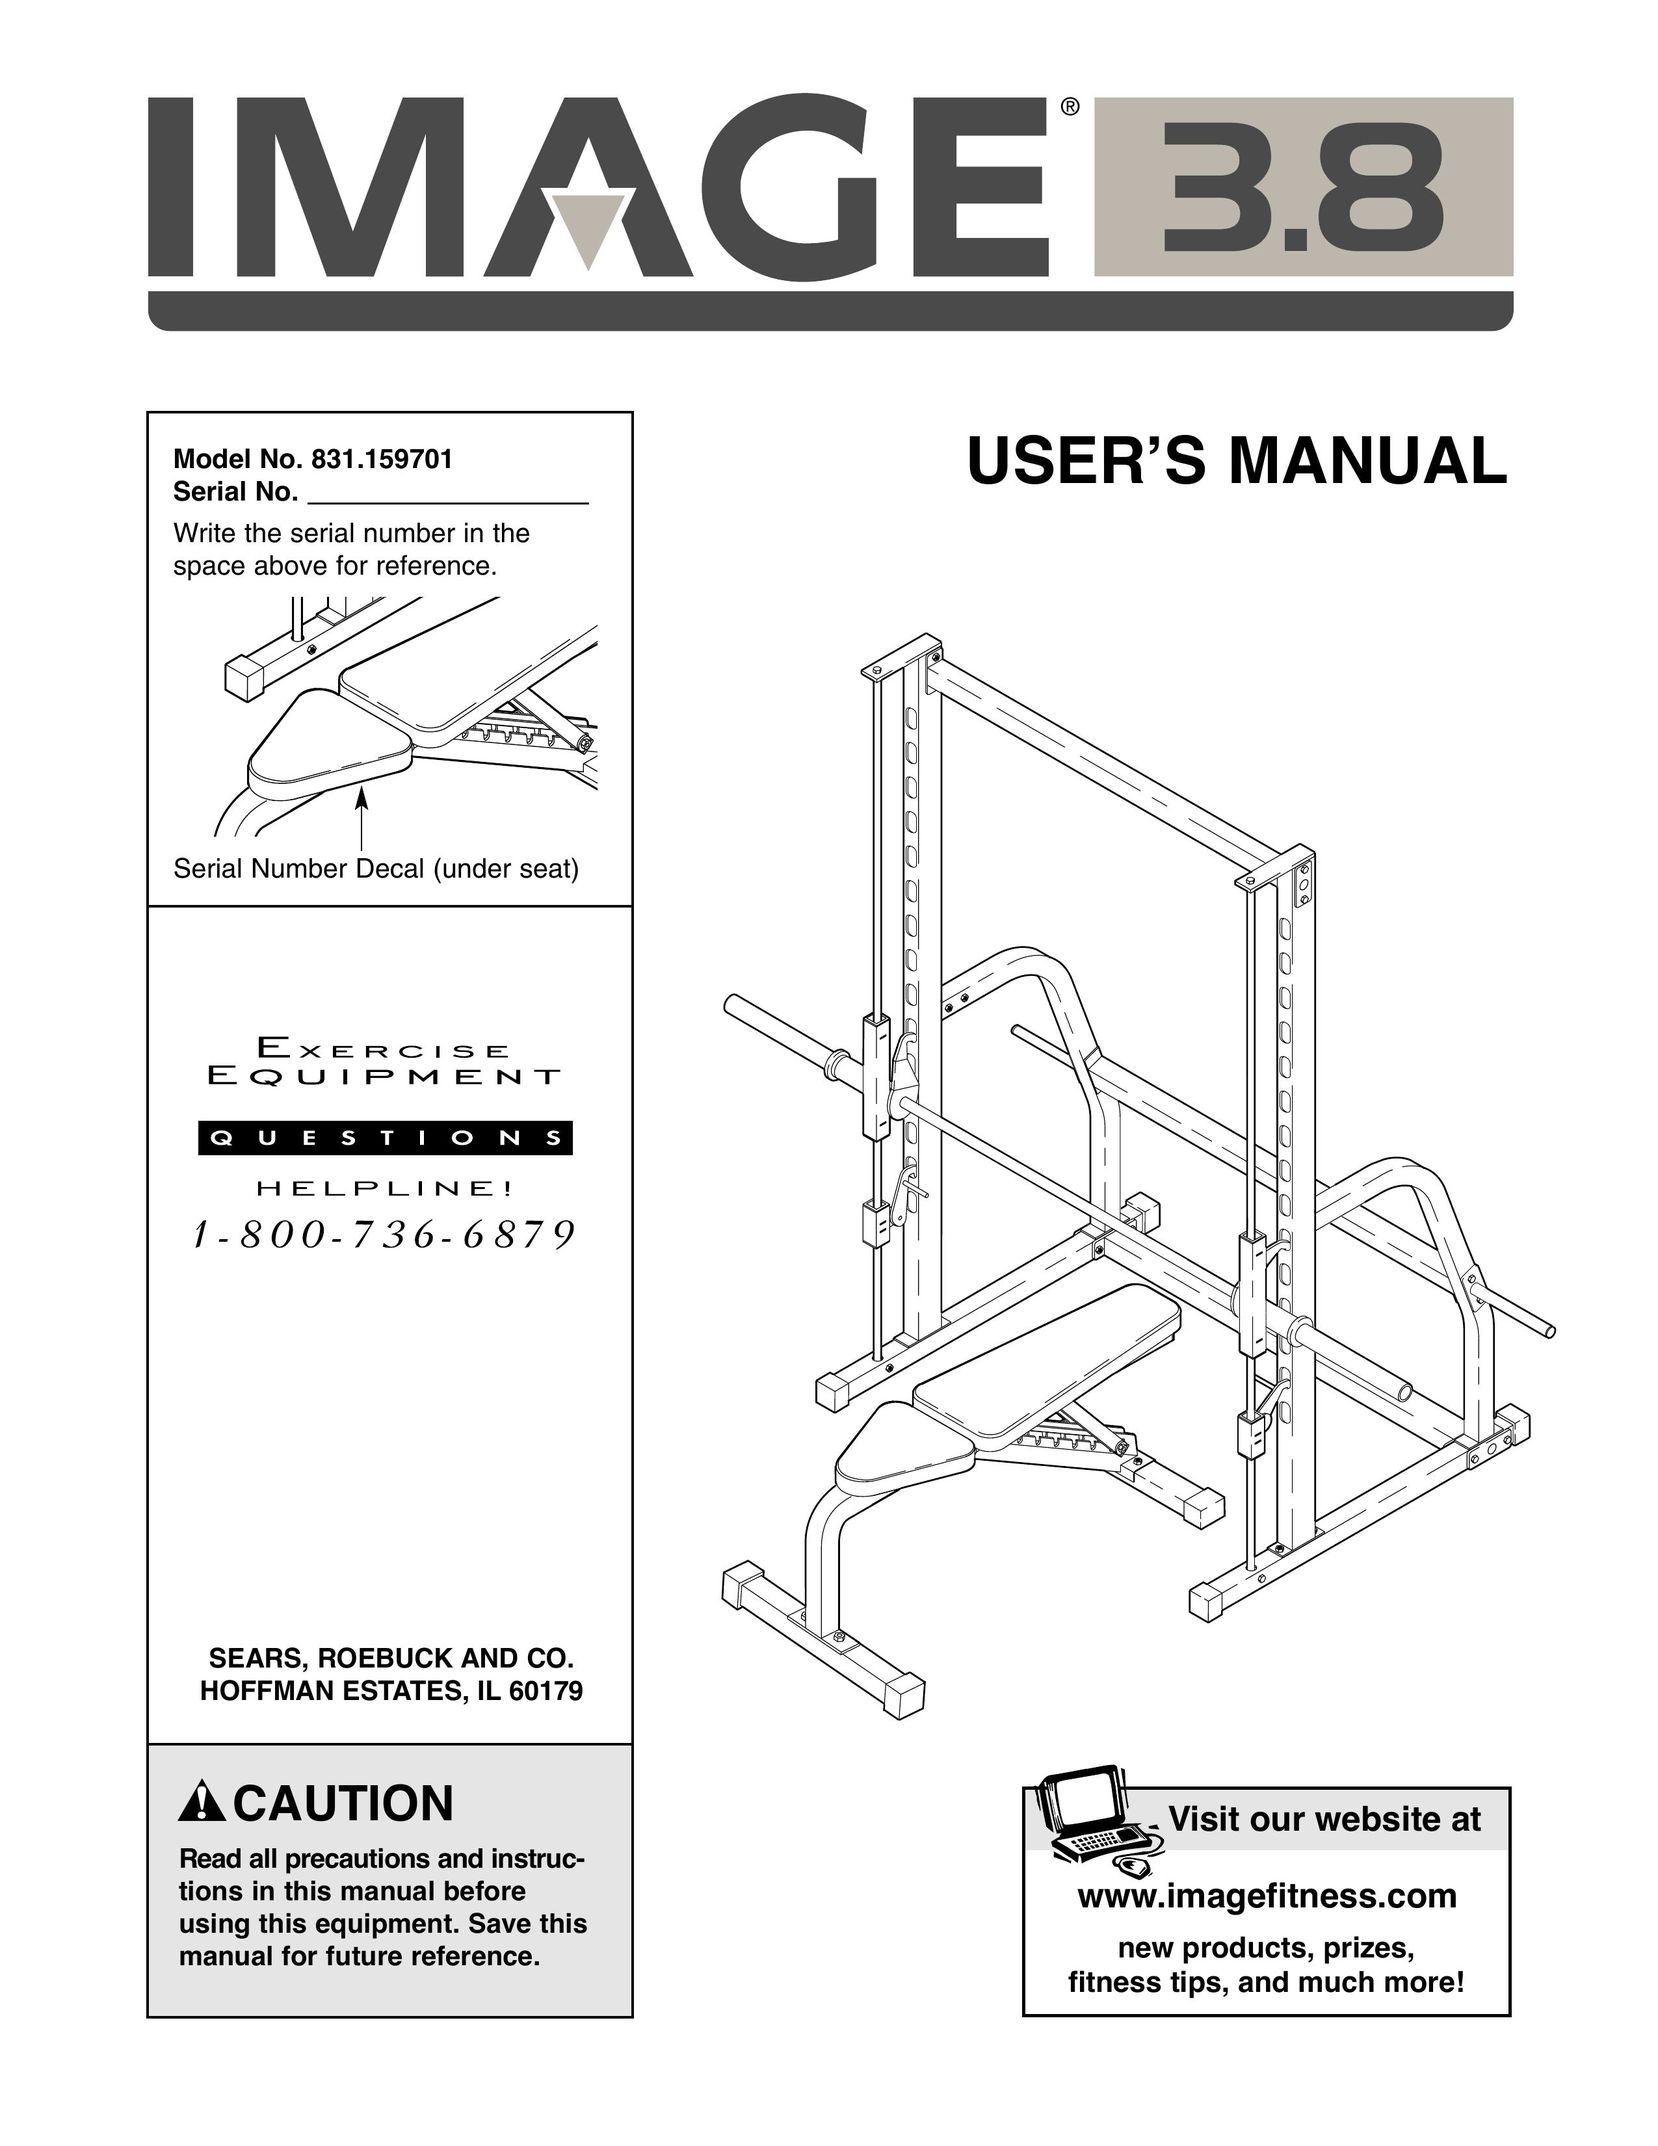 Image 831.159701 Home Gym User Manual